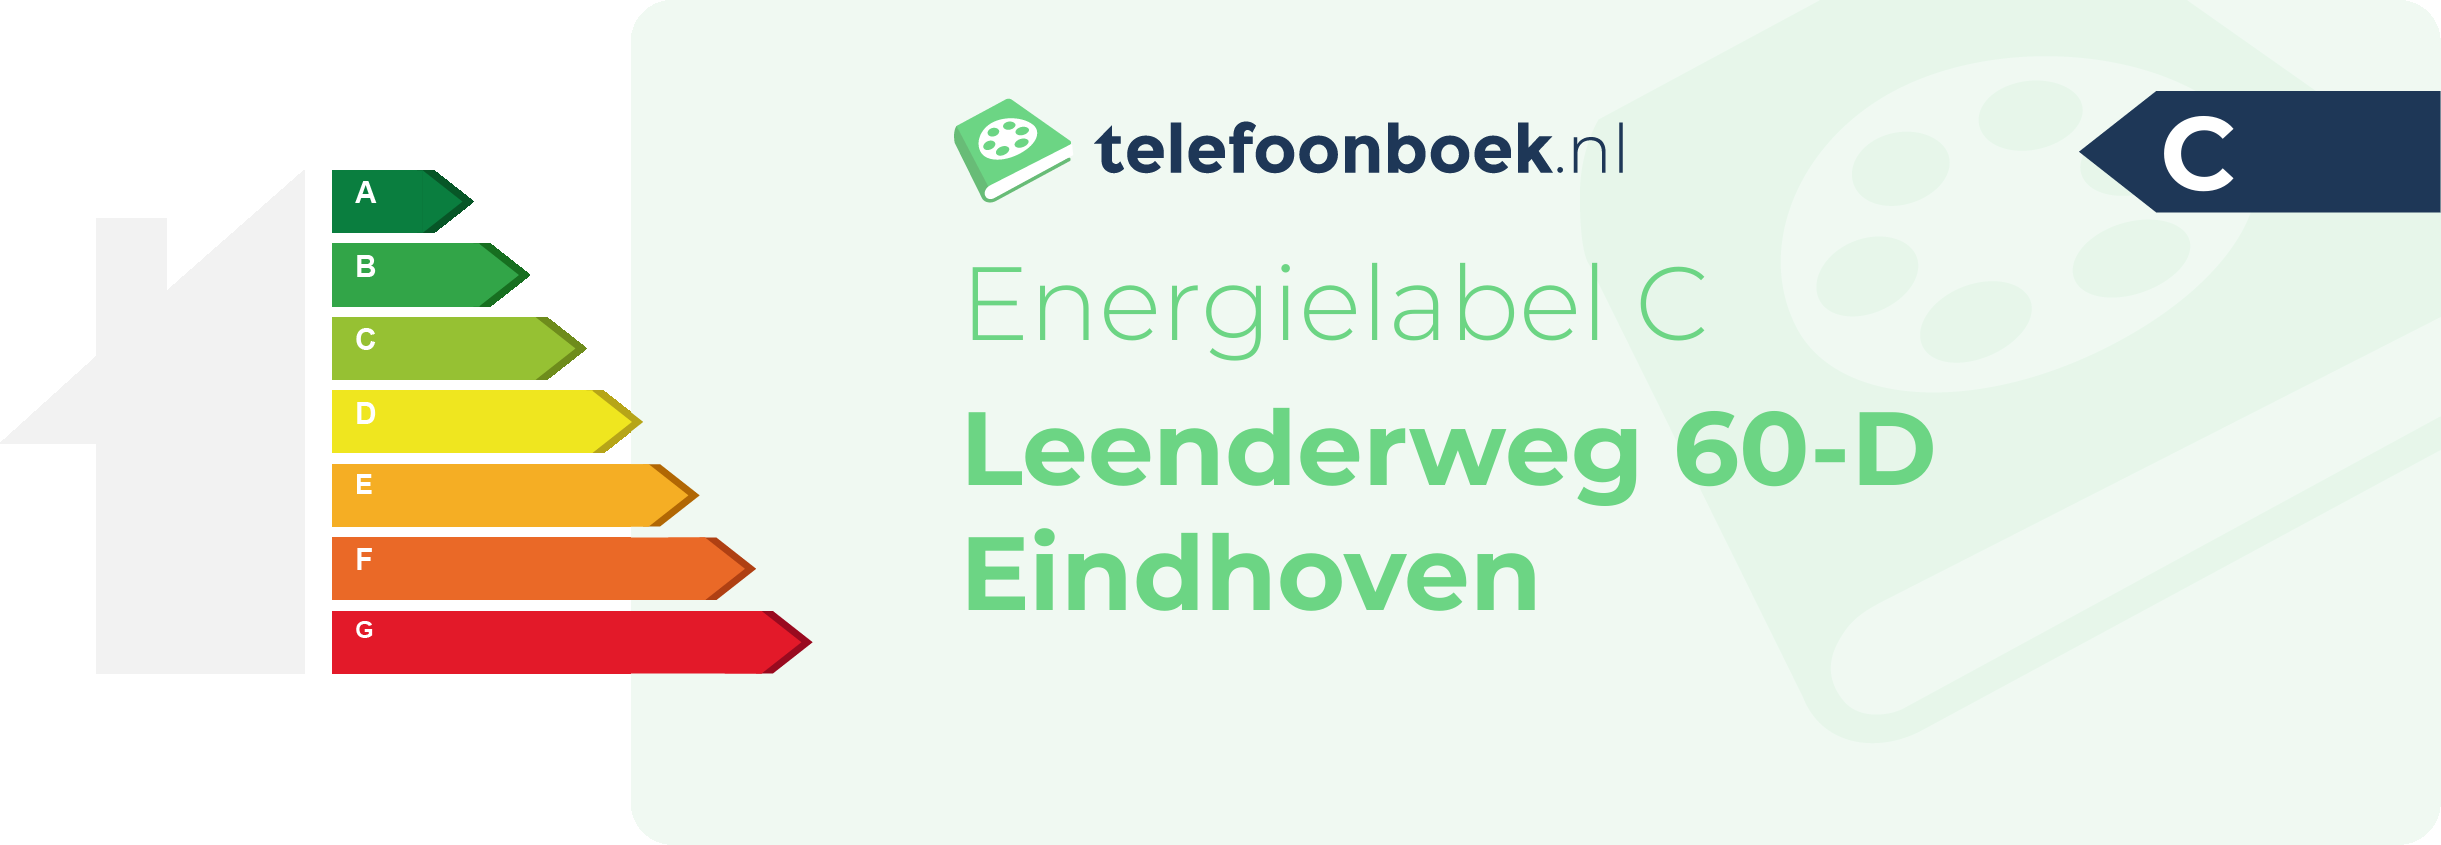 Energielabel Leenderweg 60-D Eindhoven